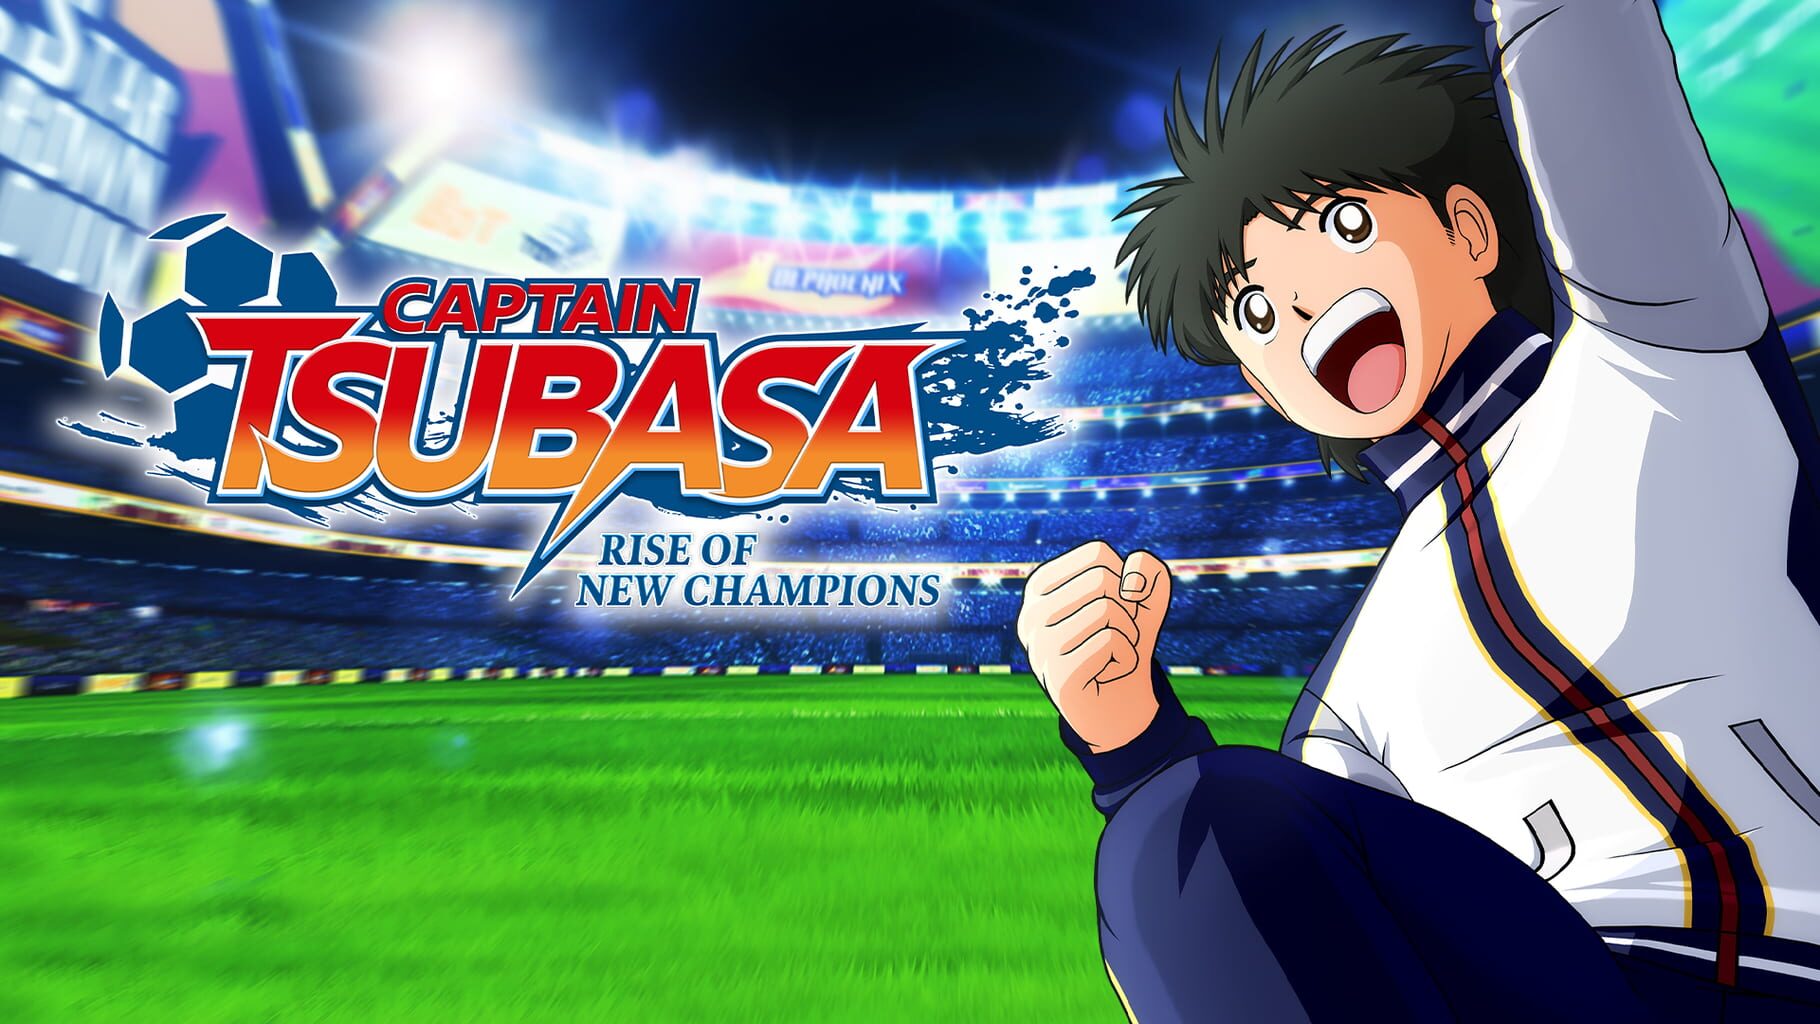 Captain Tsubasa: Rise of New Champions - Shingo Aoi artwork